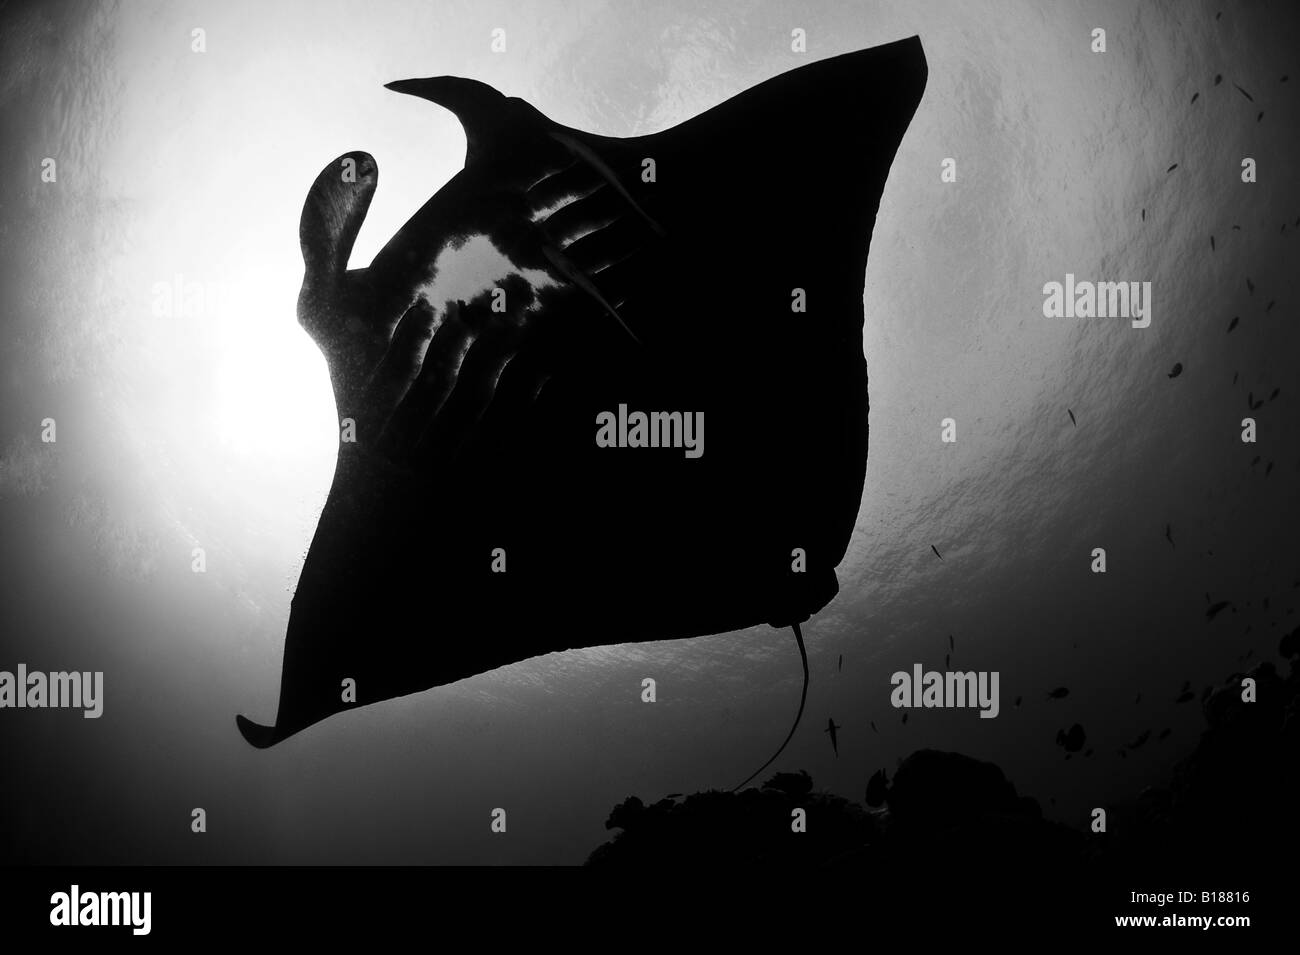 Underwaterpict Black and White Stock Photos & Images - Alamy